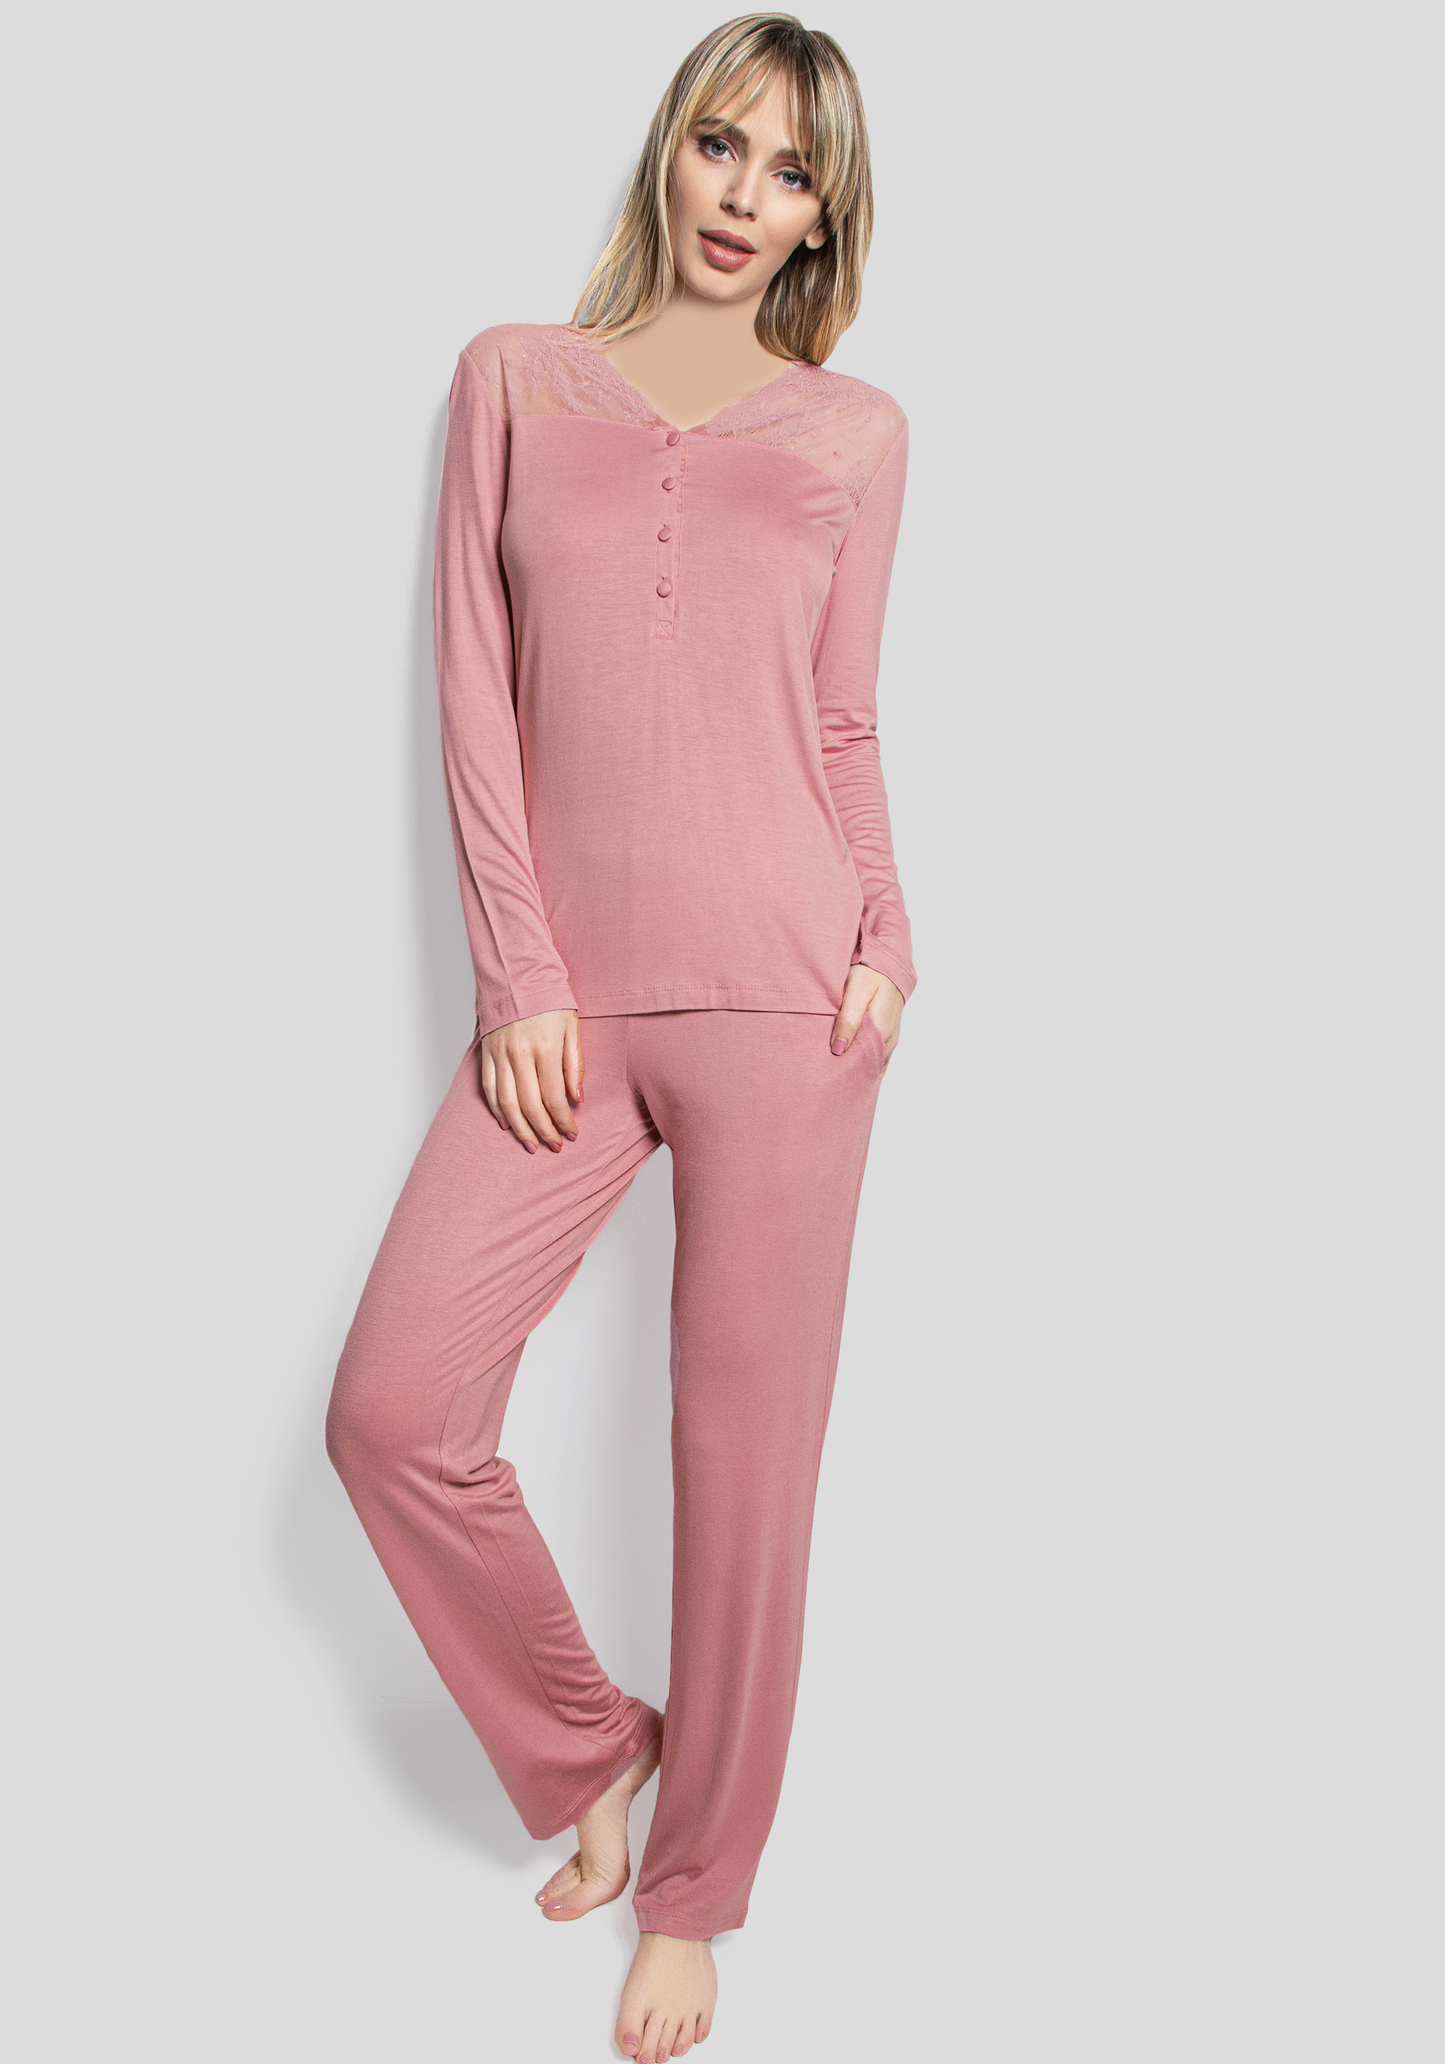 S&L Romantic Long Sleeve Pajama